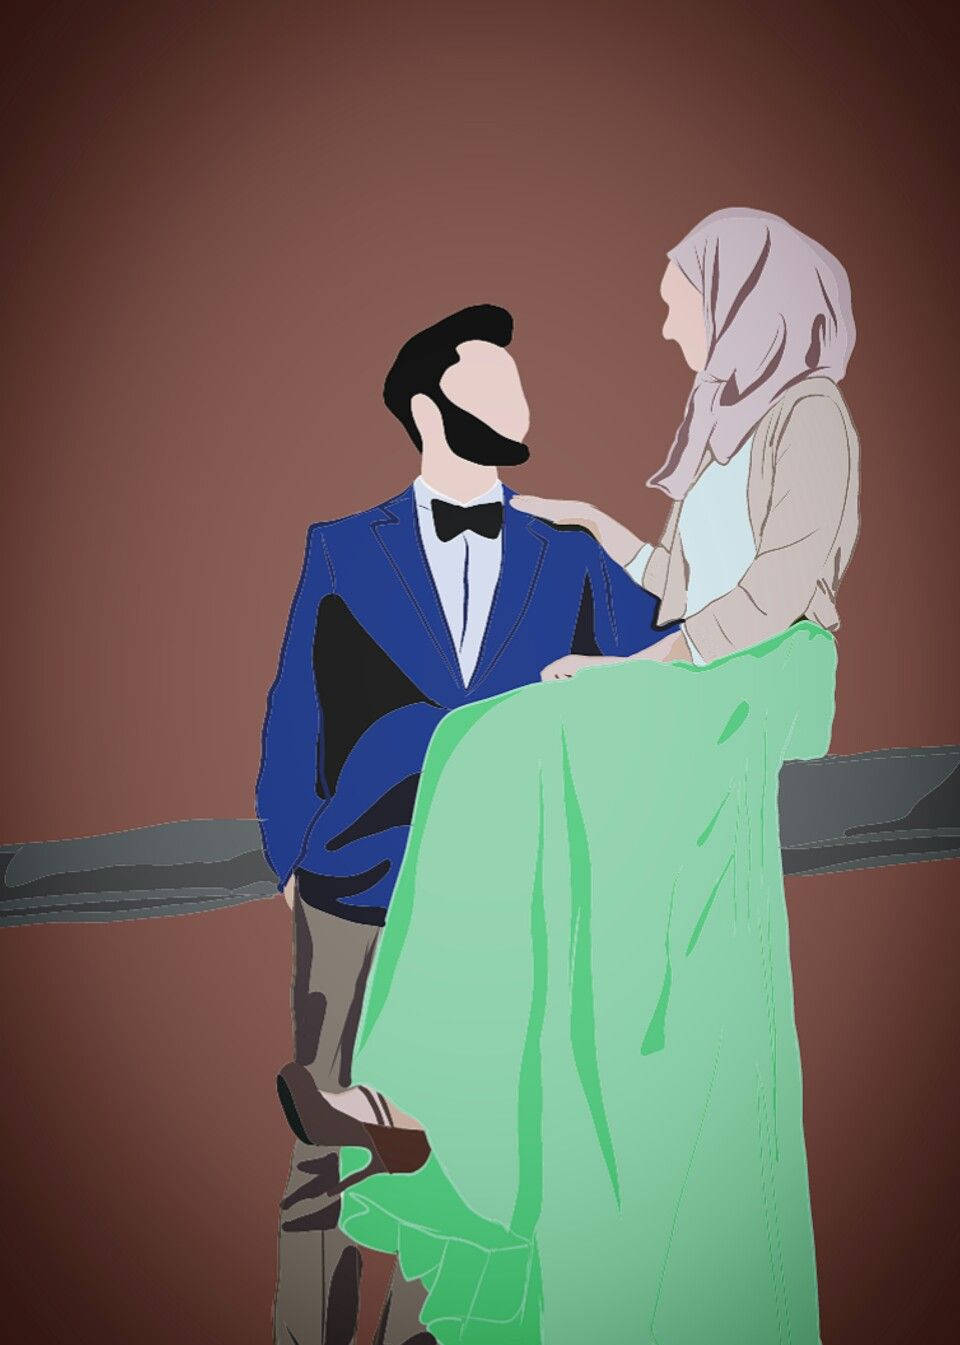 Download Muslim Couple Cartoon Minimalist Formal Clothing ...